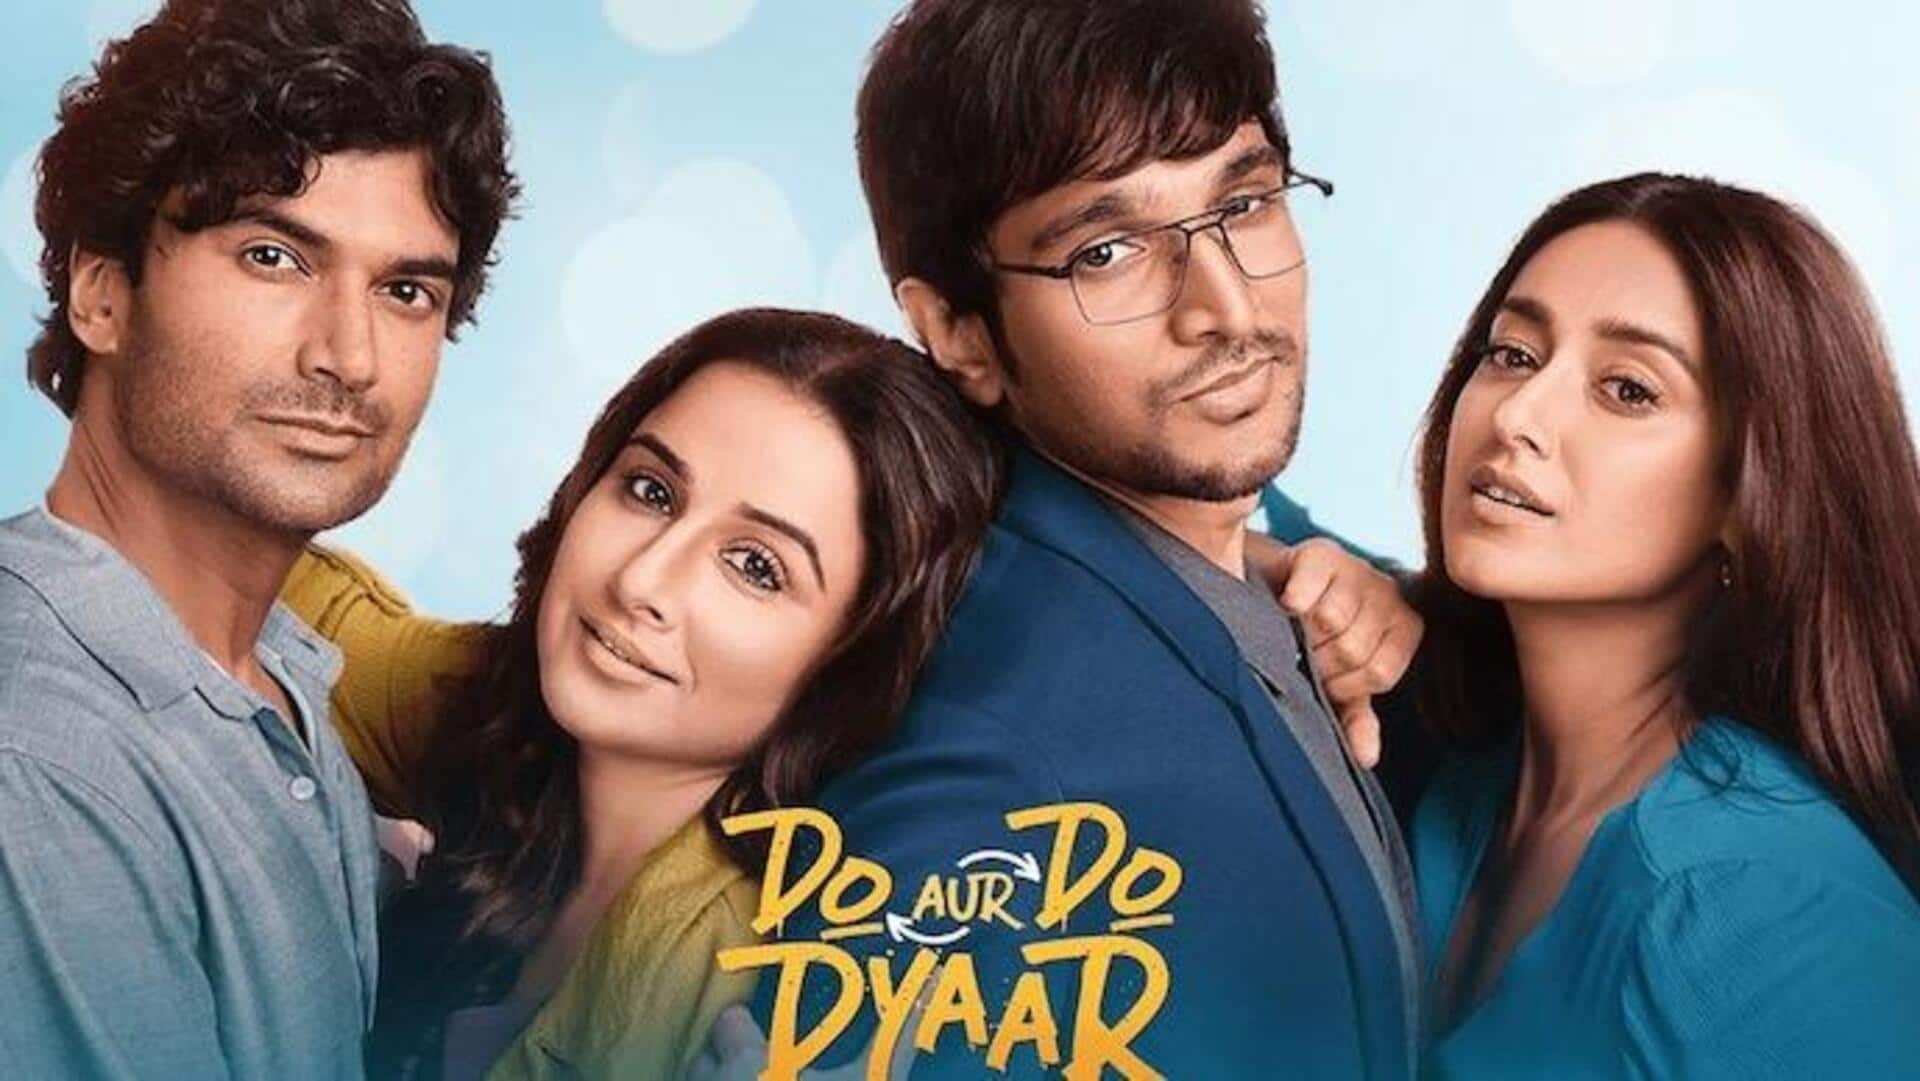 Box office: 'Do Aur Do Pyaar' struggles to attract audience